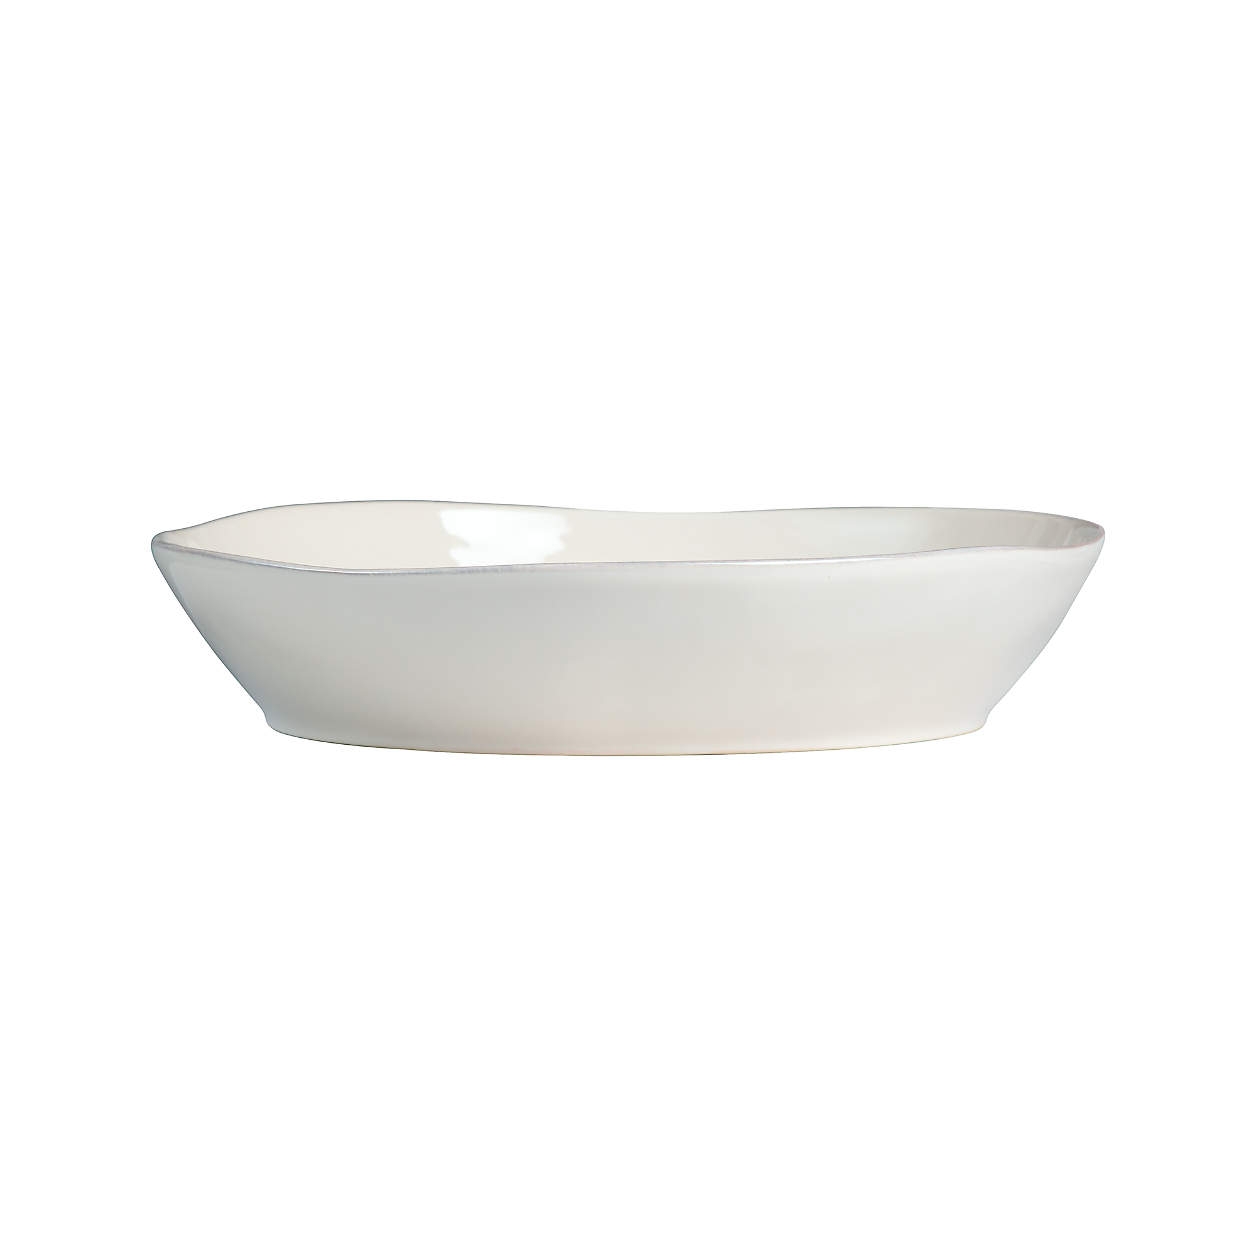 Marin White Centerpiece Bowl - Image 1